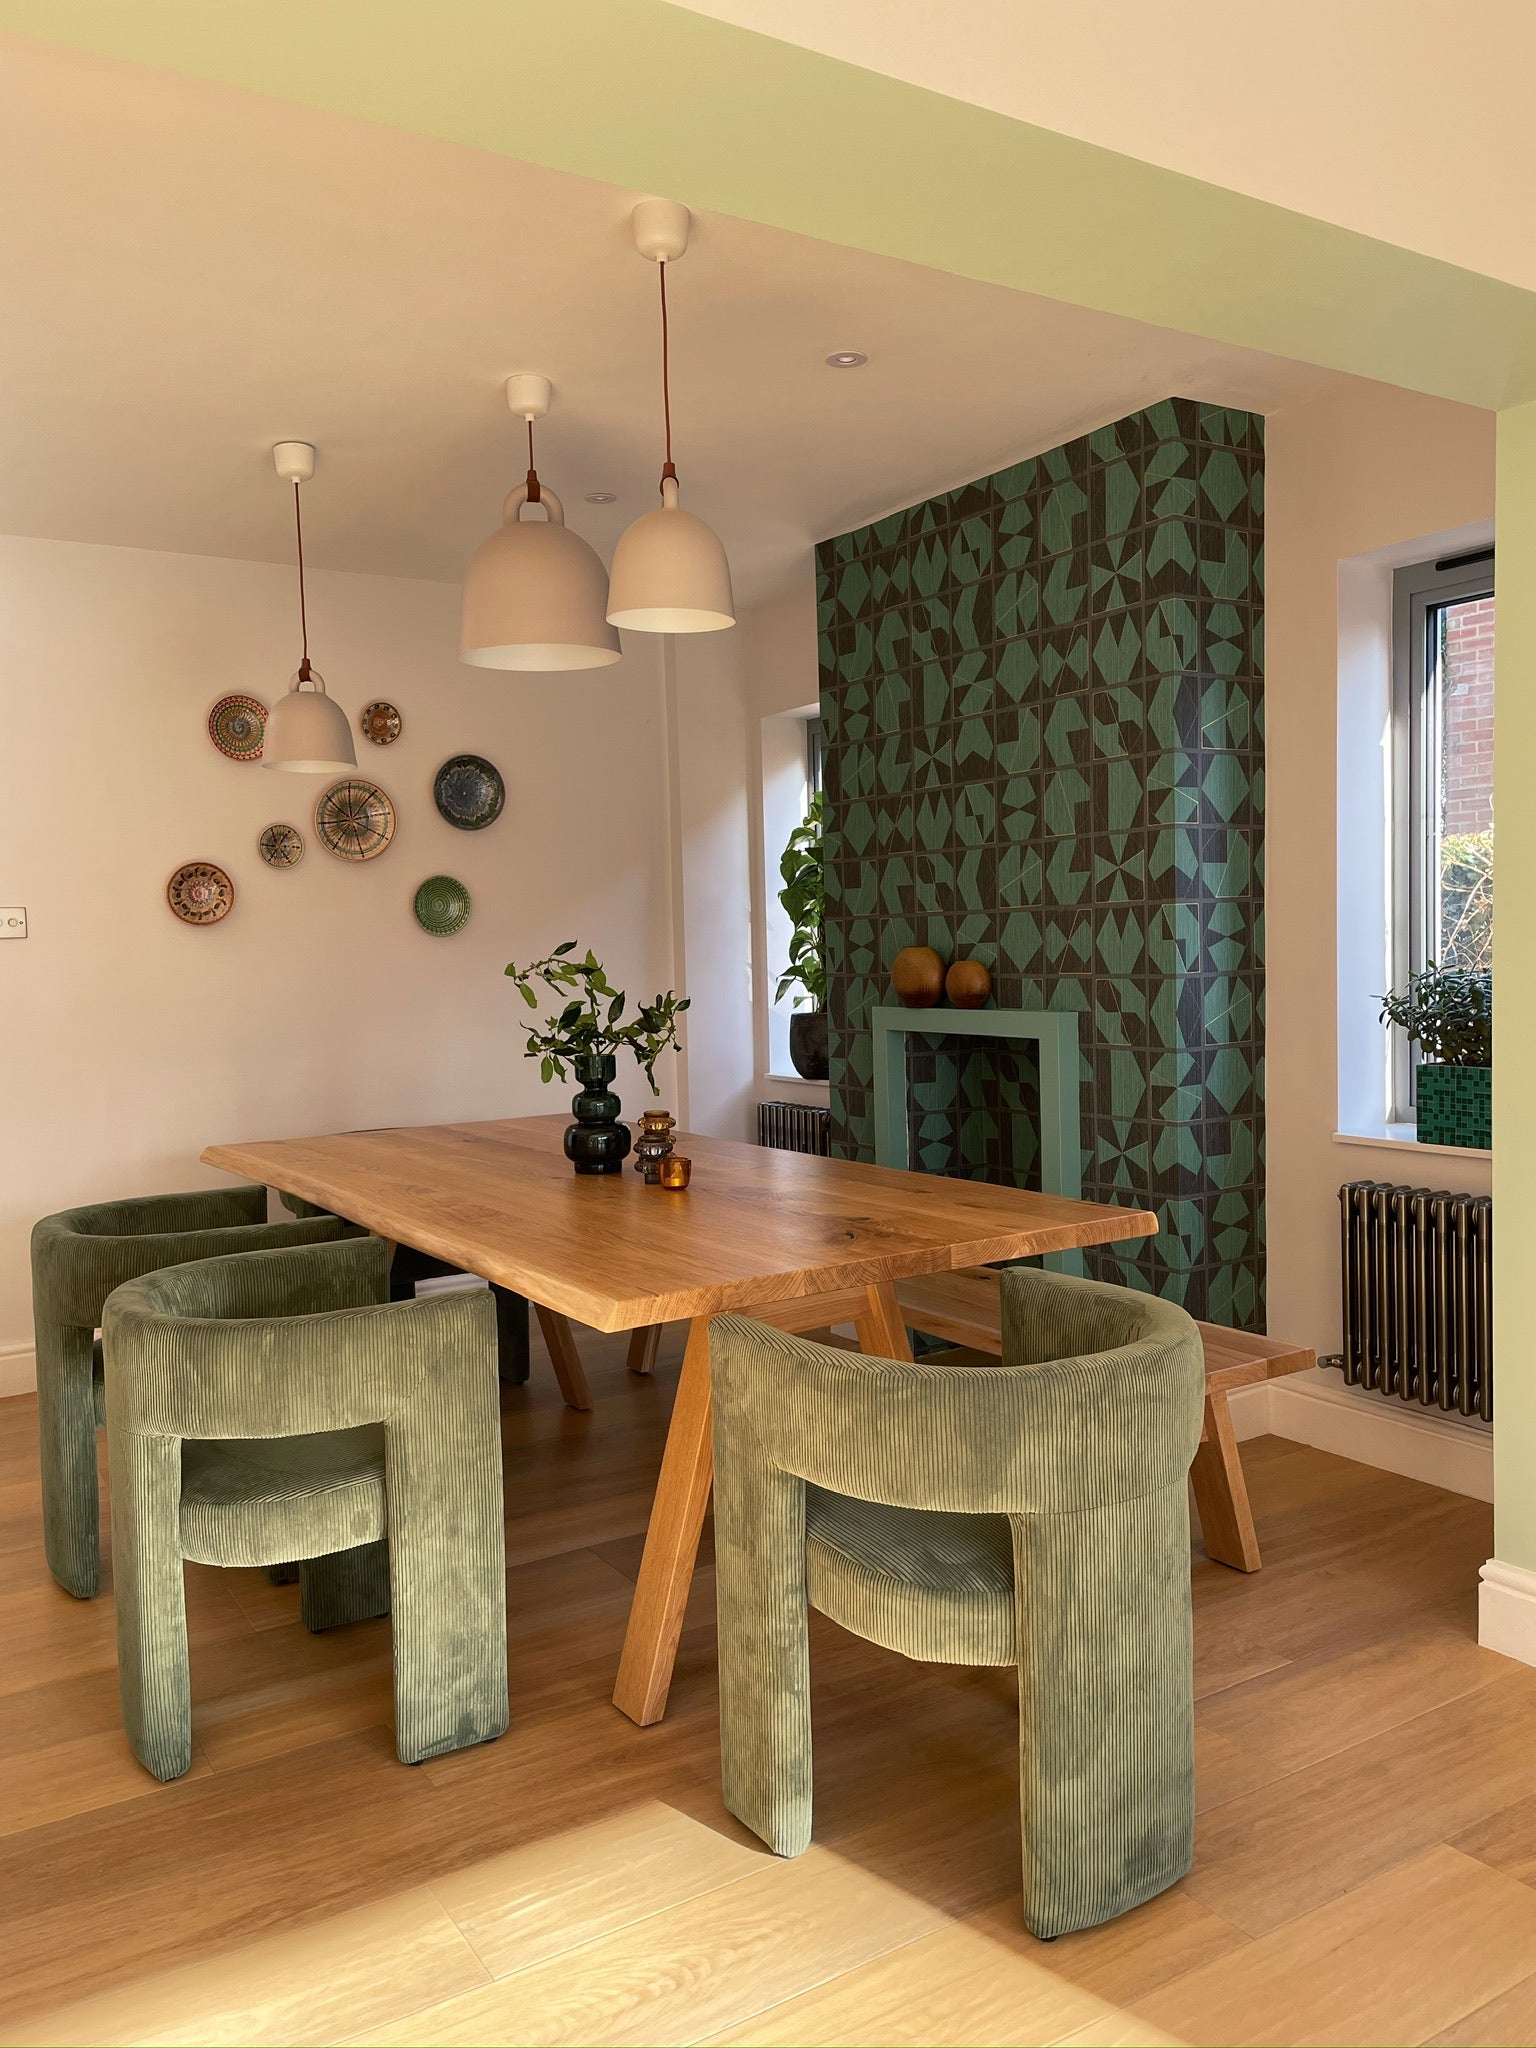 Interior design, coordinated dining room scheme, Jen alton design